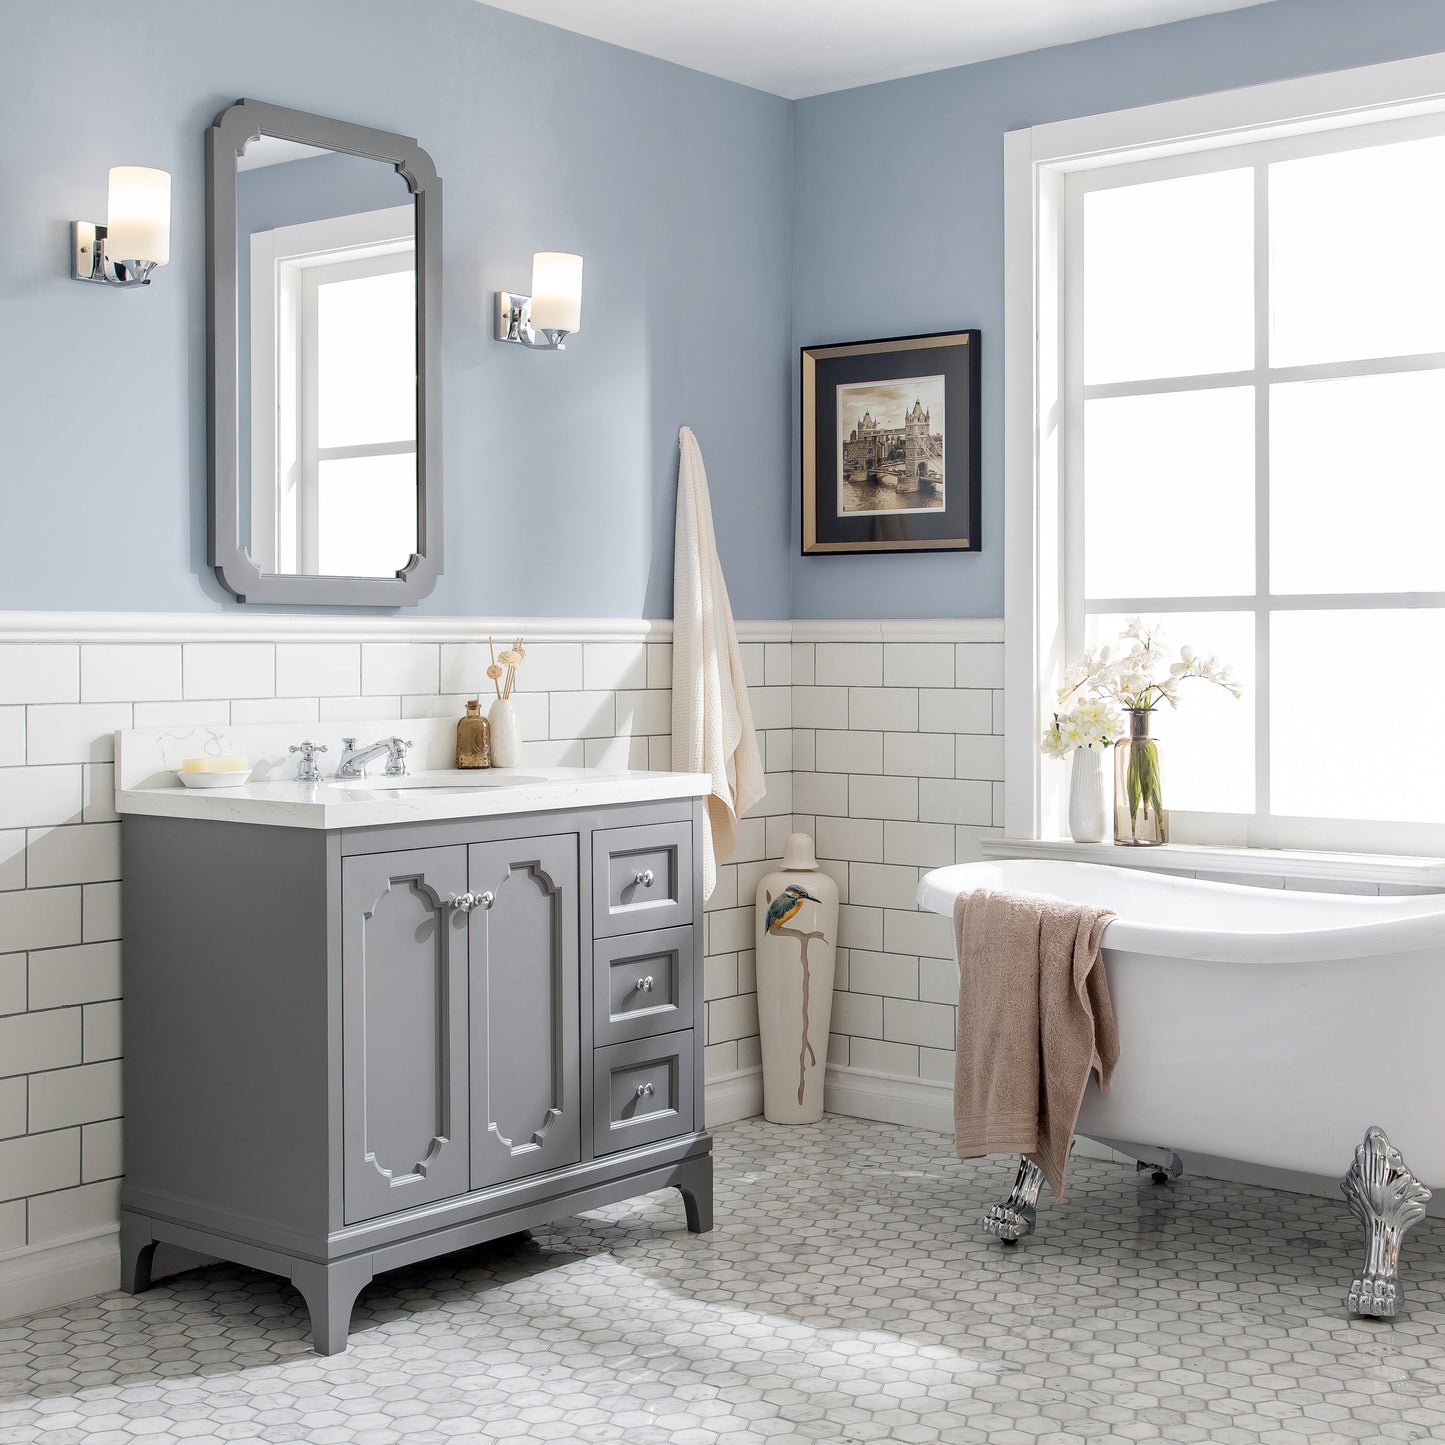 Water Creation Queen 36" Inch Single Sink Quartz Carrara Vanity with Matching Mirror and Lavatory Faucet - Luxe Bathroom Vanities